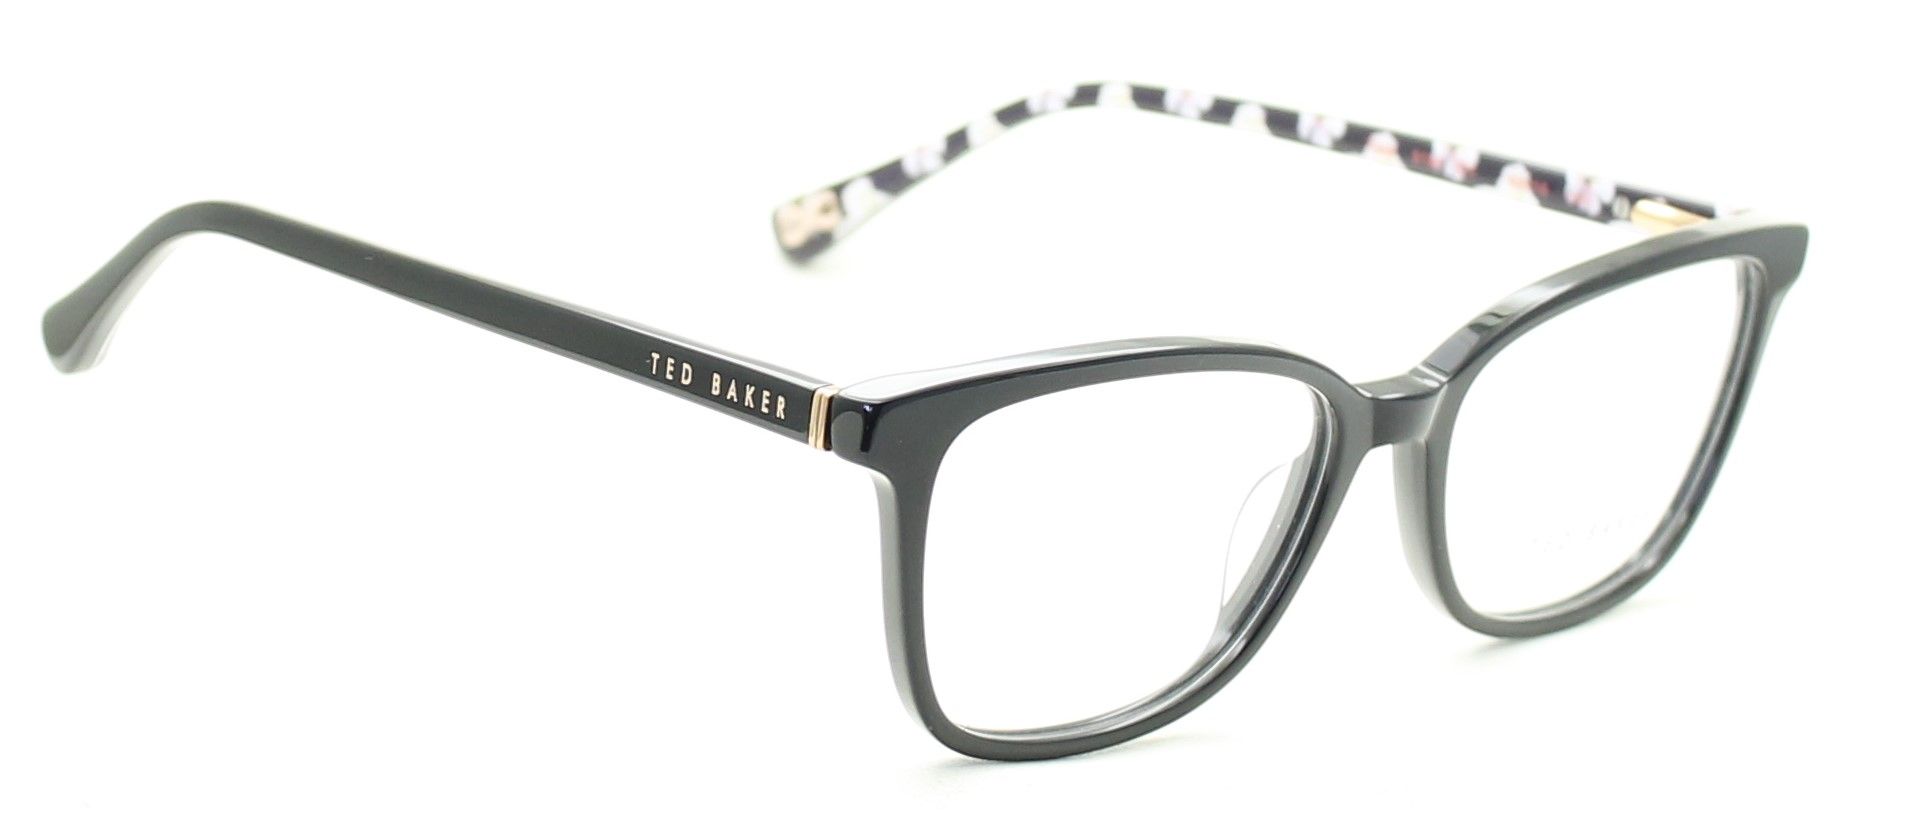 TED BAKER Tyra 9154 001 53mm Eyewear FRAMES Glasses Eyeglasses RX ...